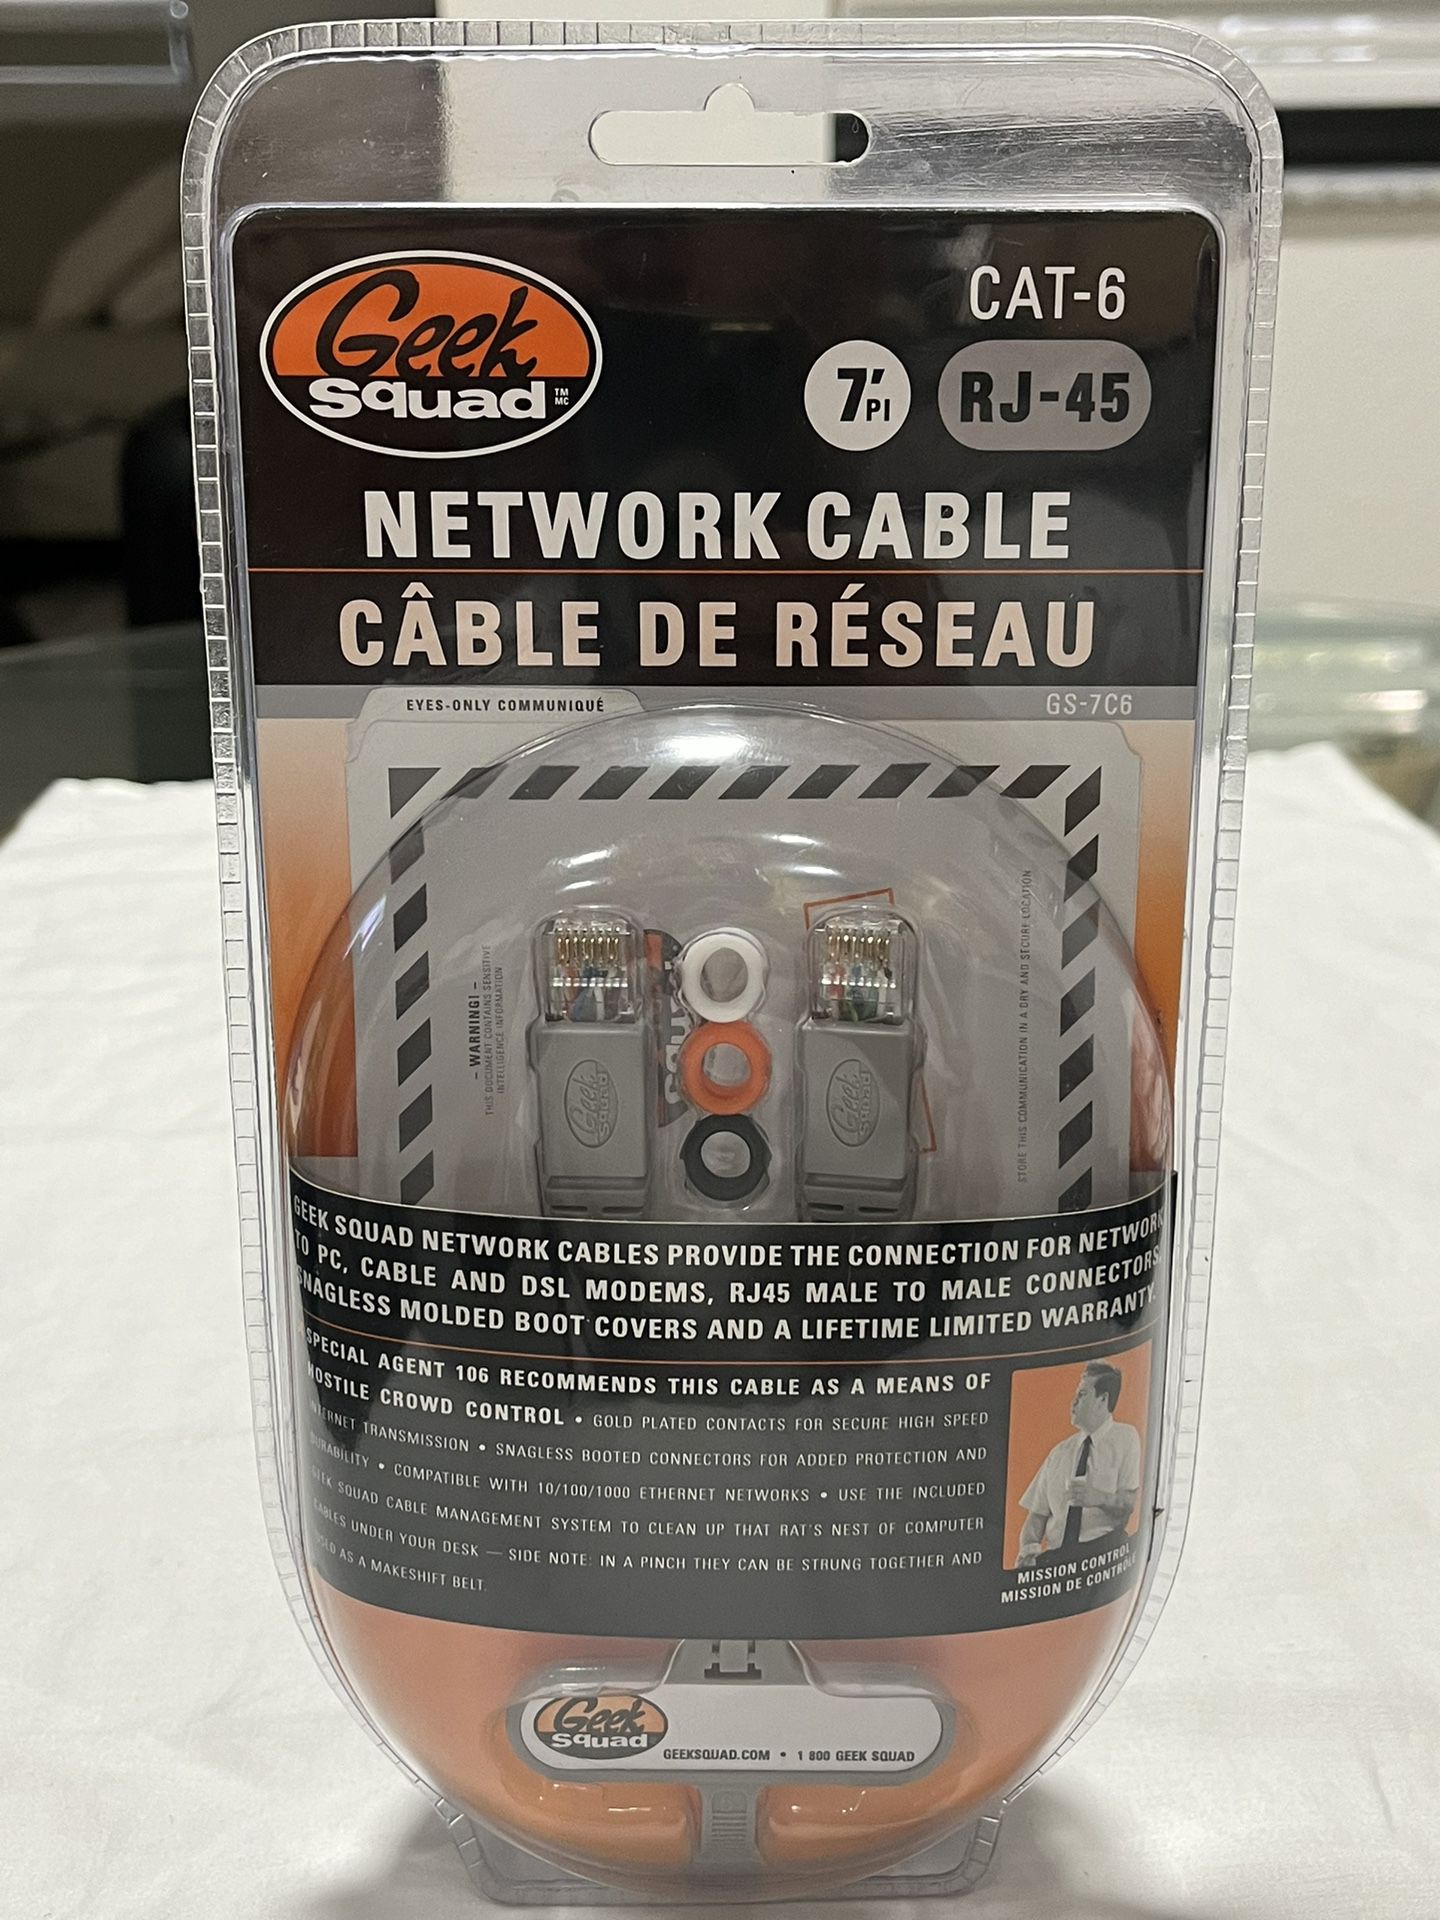 Geek Squad Network Cable 7” CAT-6 RJ-45 GS-7C6